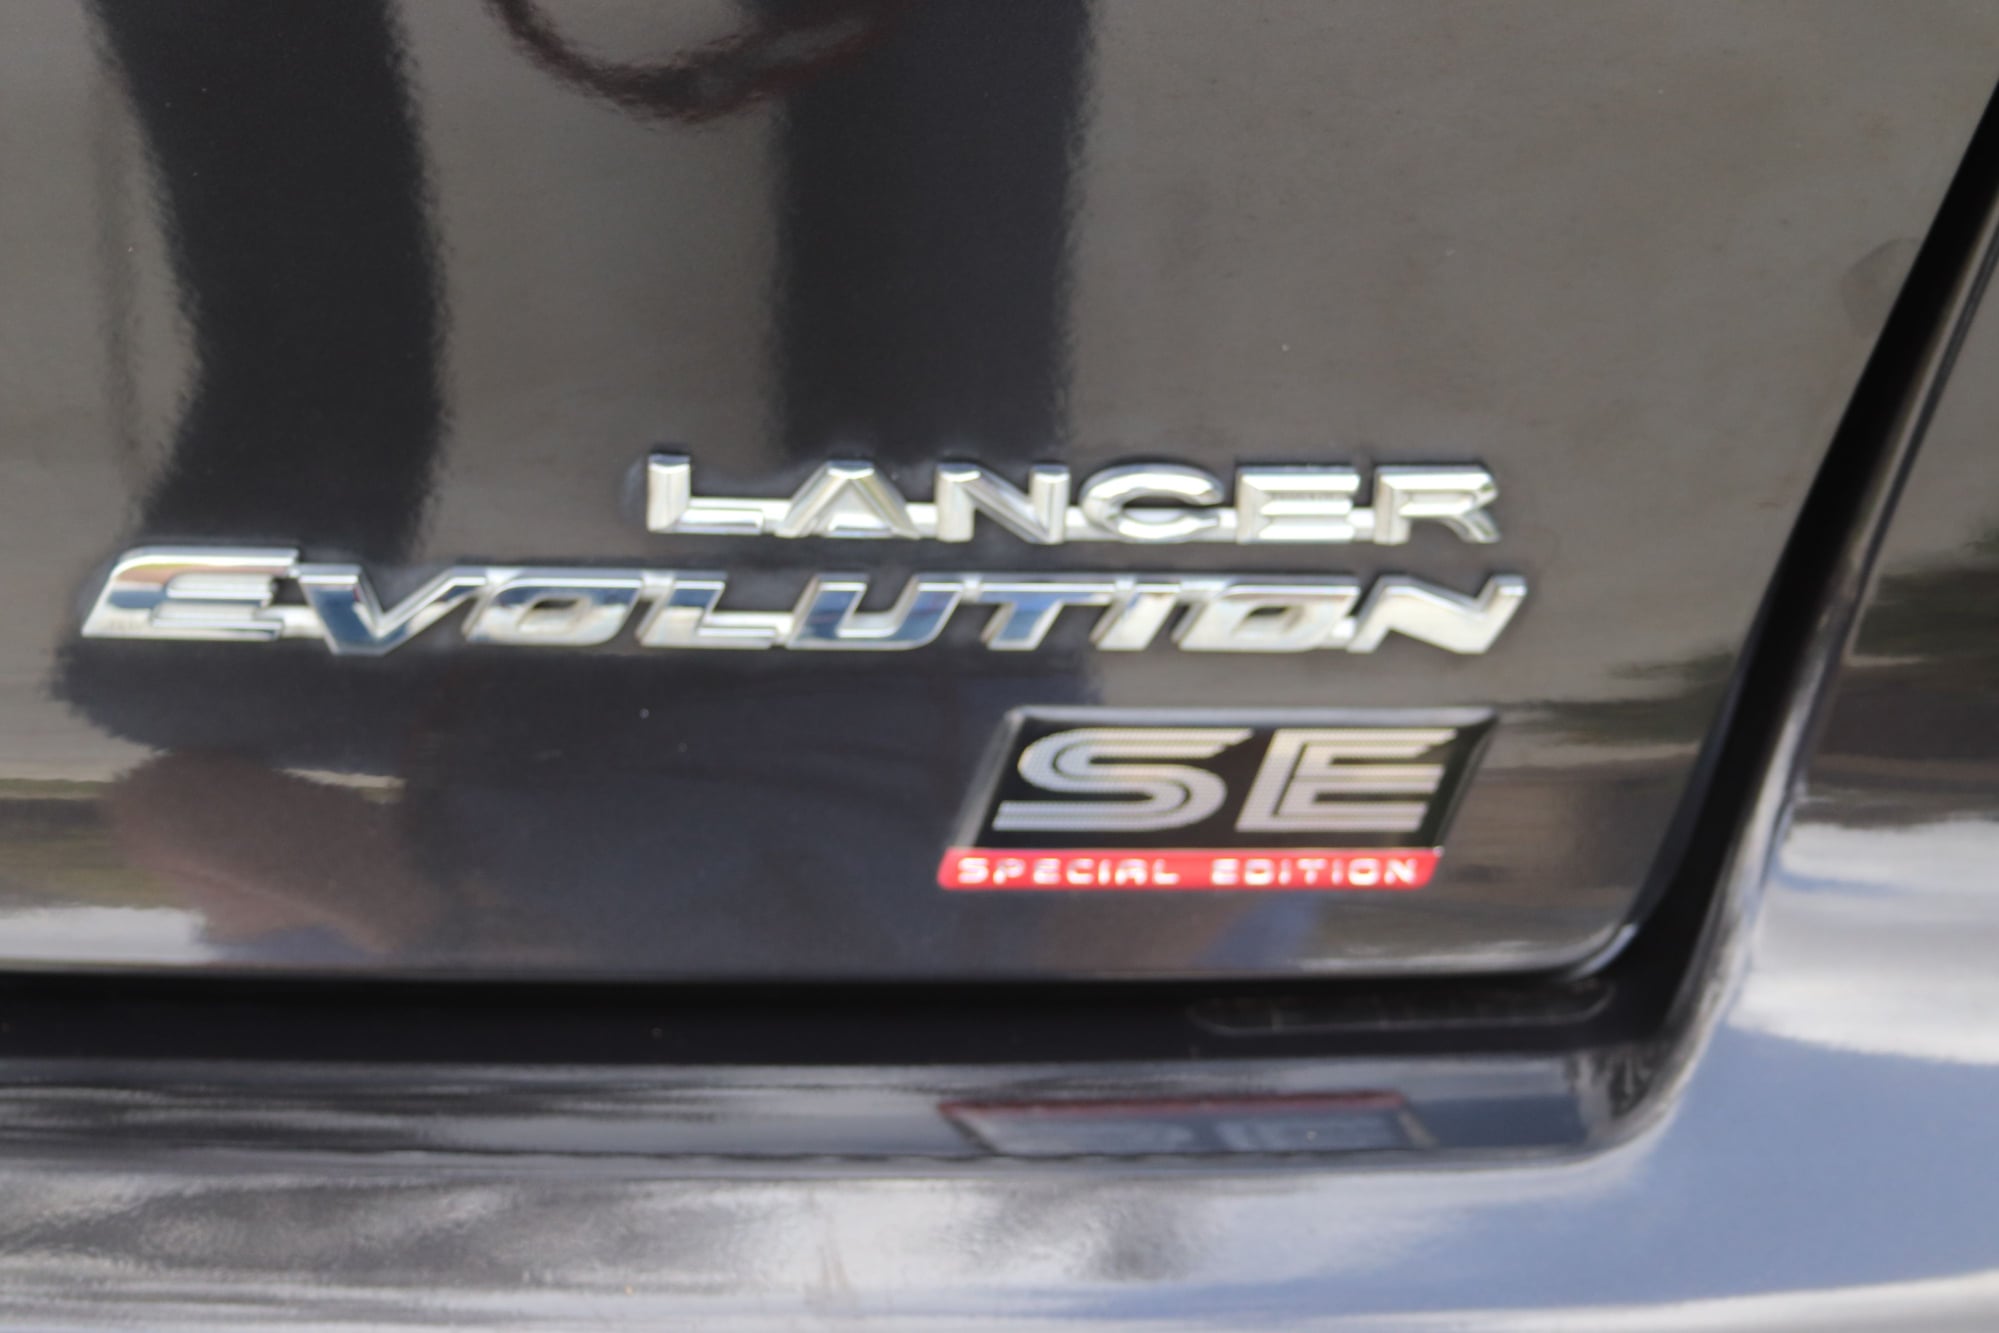 2010 Mitsubishi Lancer Evolution - 2010 Mitsubishi Lancer Evolution SE (47,717 miles) One owner. No mods. All original. - Used - San Antonio, TX 78213, United States